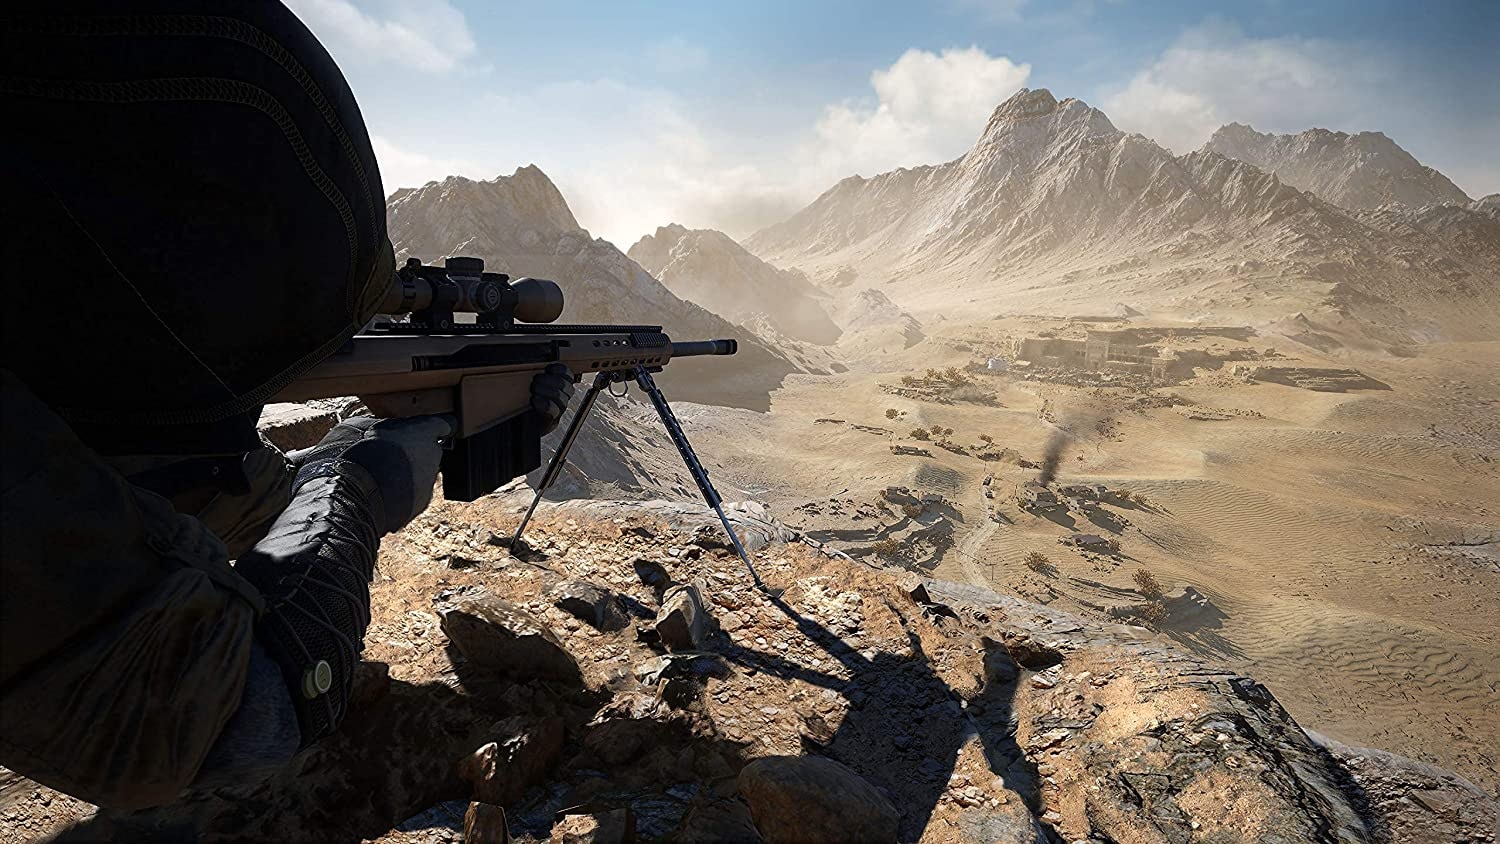 Koch Media Spielesoftware »Sniper Ghost Warrior Contracts 2 - Elite Edition«, PlayStation 5